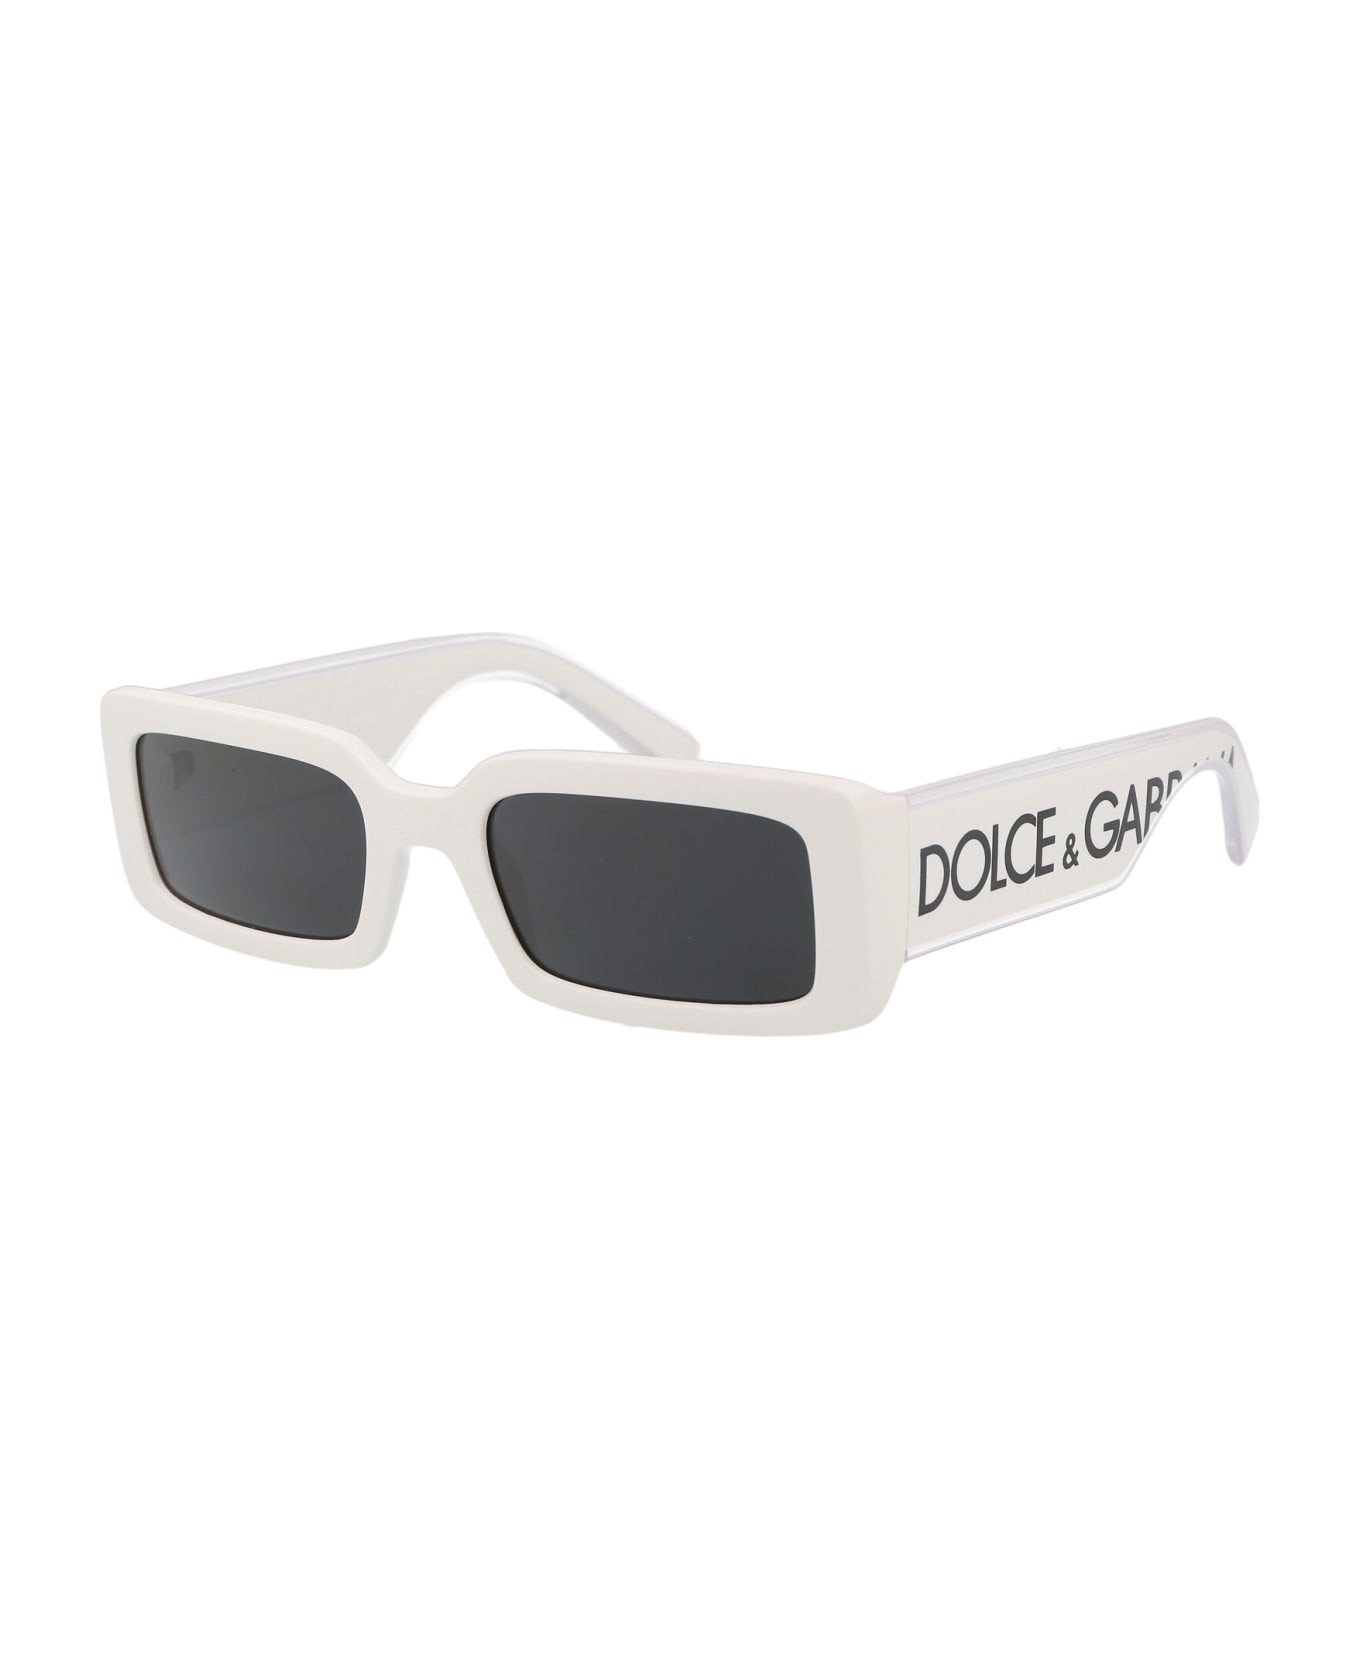 Dolce & Gabbana Eyewear 0dg6187 Sunglasses - 331287 White